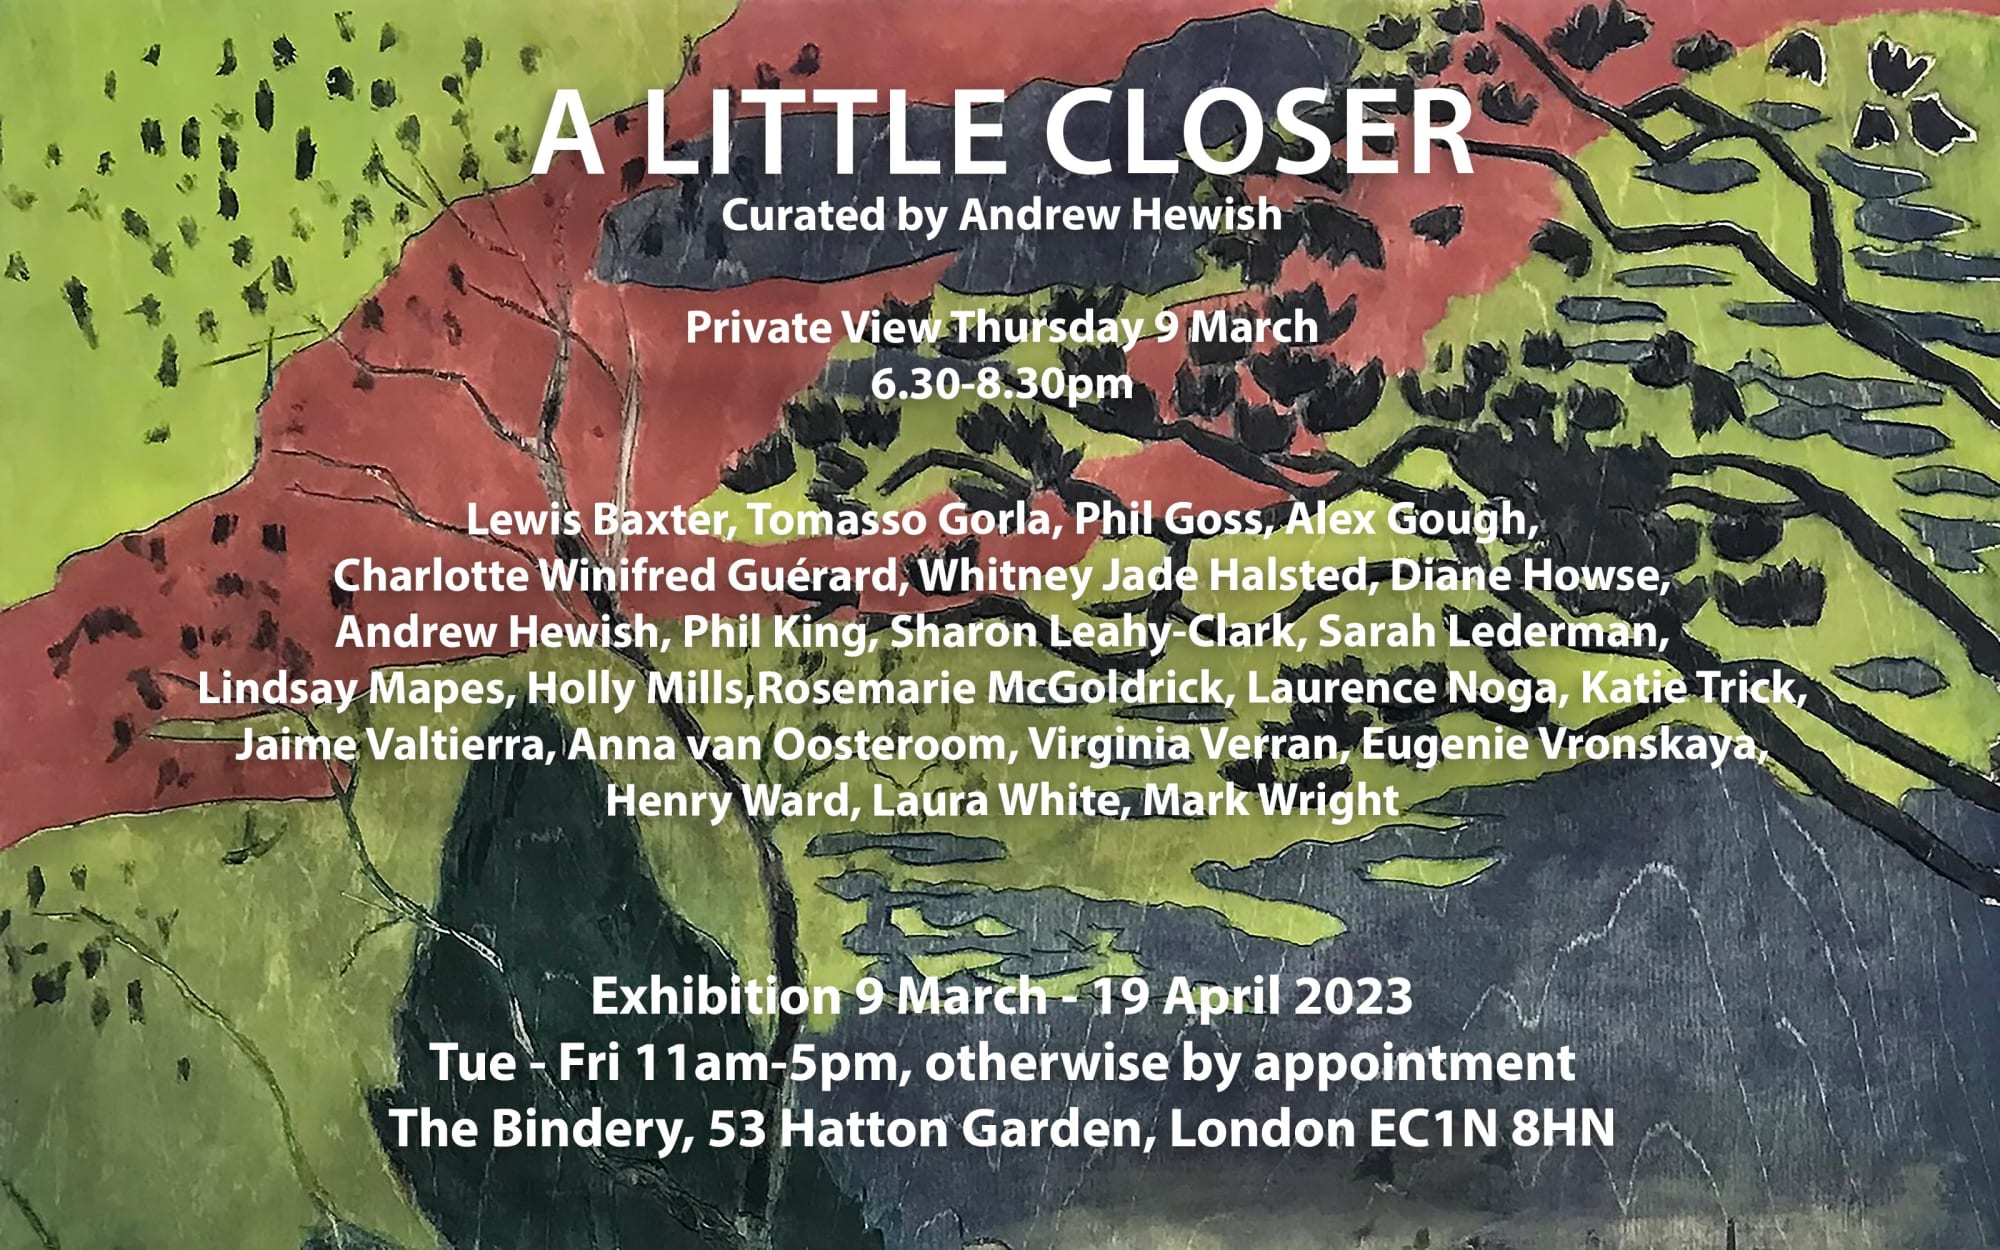 A LITTLE CLOSER: Exhibition at The Bindery, 53 Hatton Garden, London EC1N 8HN